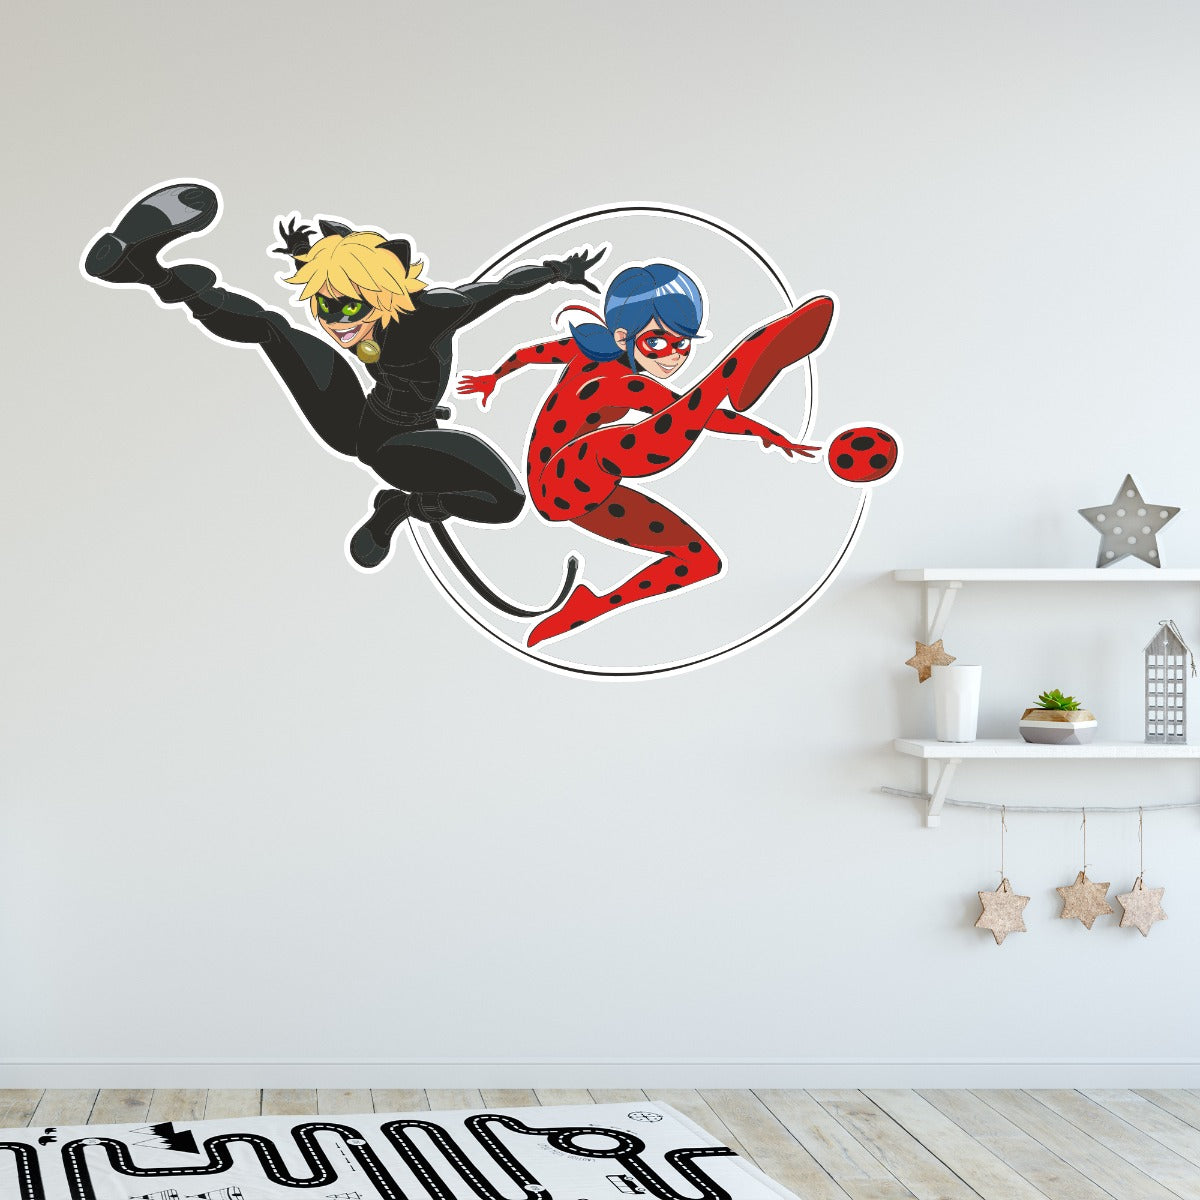 Miraculous Ladybug and Cat Noir Wall Sticker MIR02